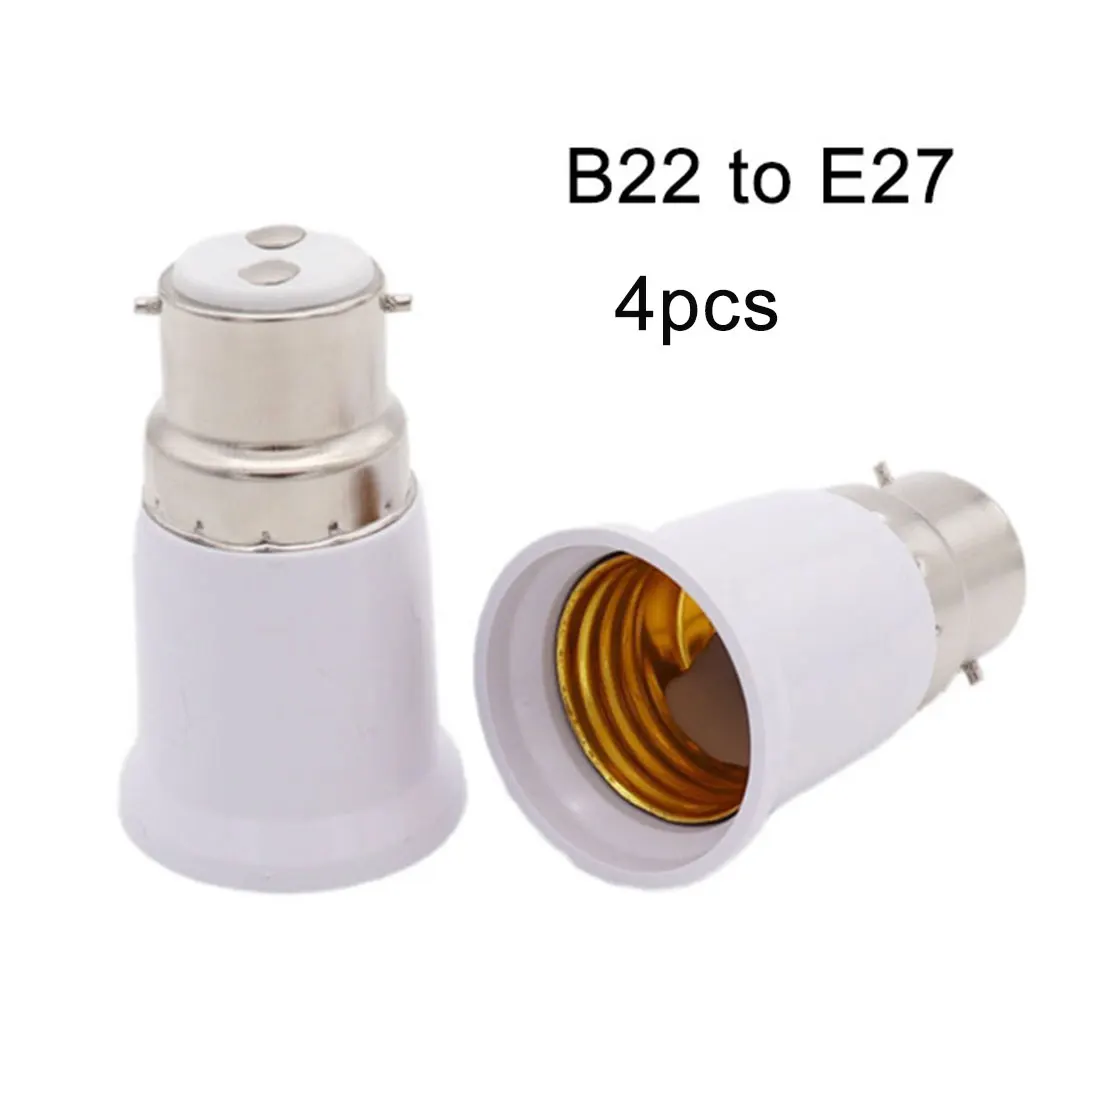 4pcs Pack B22 to E27 Bulb Adapters Bayonet Lamp Base to Screw E26 E27 Bulb Holder Converter Two-Pin Socket to Edison Base ac dc 12v ba15s led light bulb s8 bayonet base non dimmable 2w waterproof lamp cri80 for boat rv soft warm white